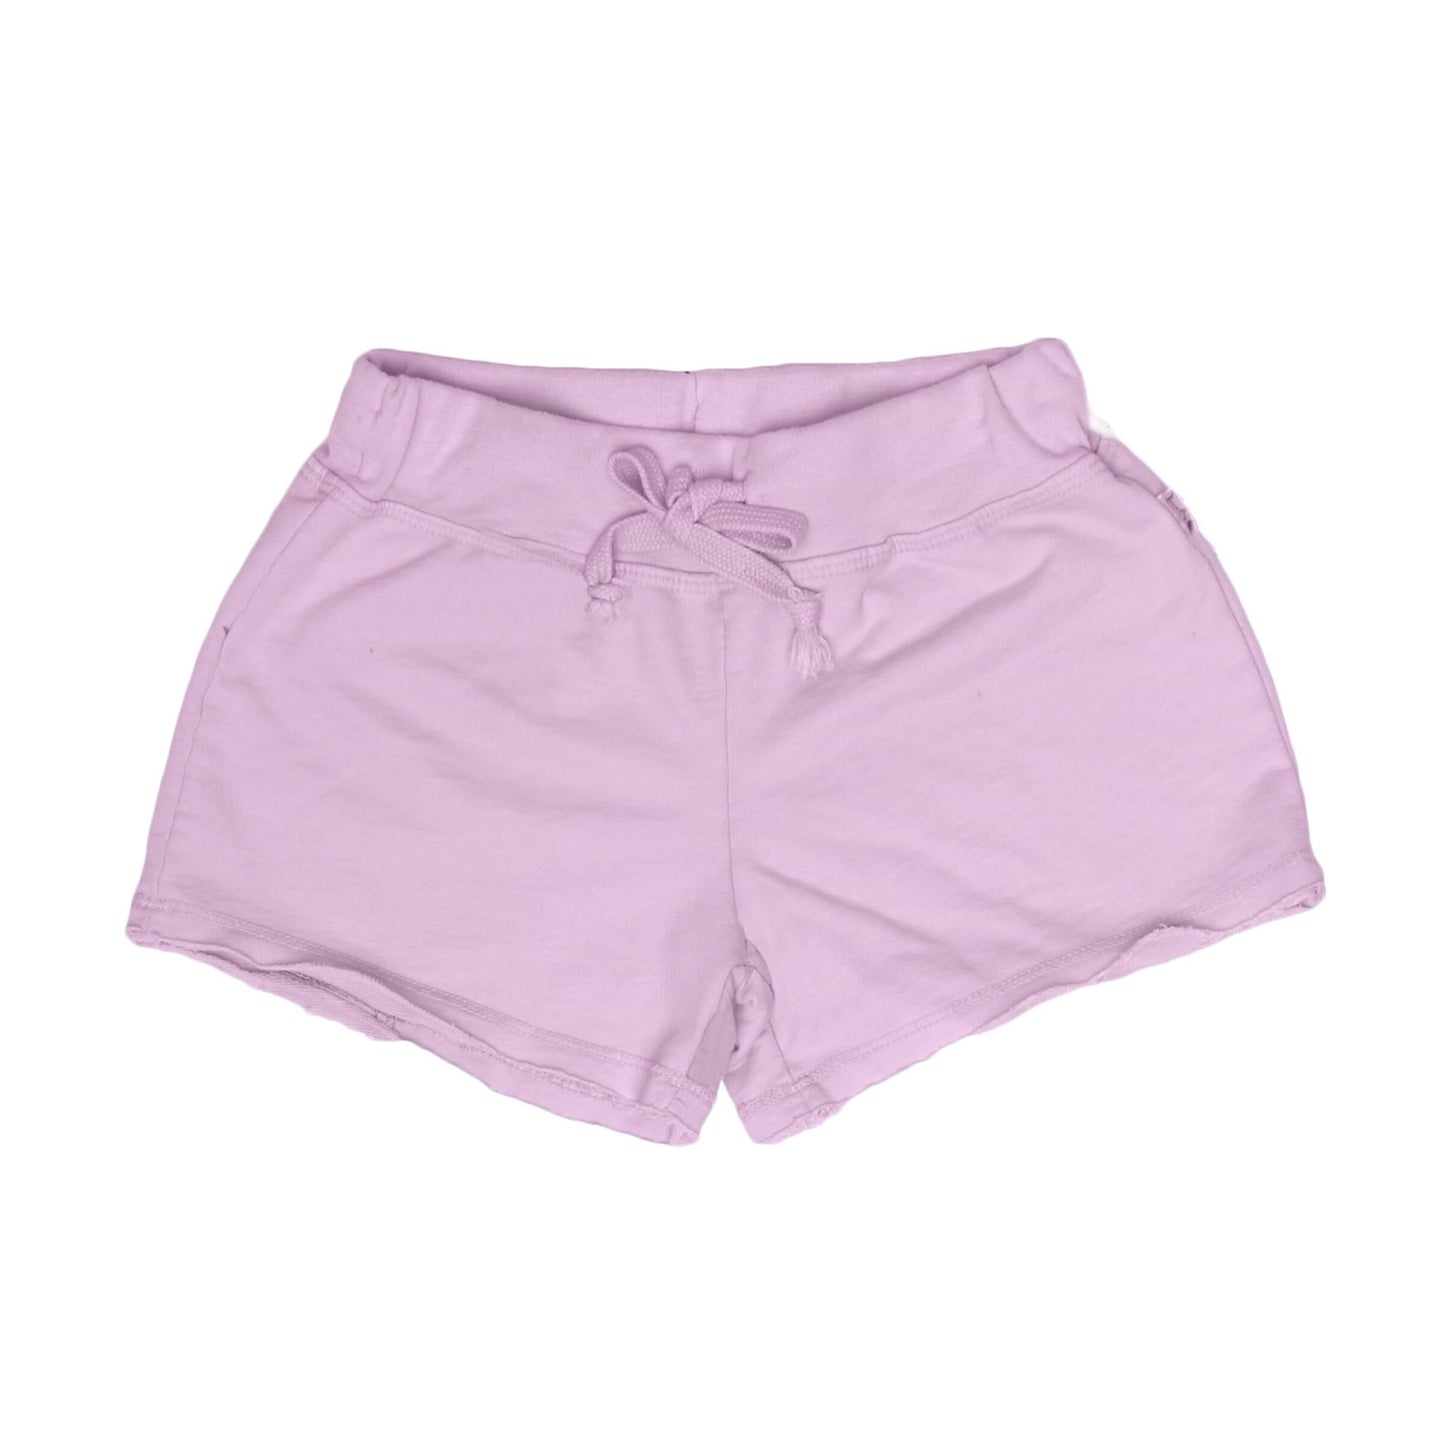 Heather Raw-Edged Shorts with Back Pocket